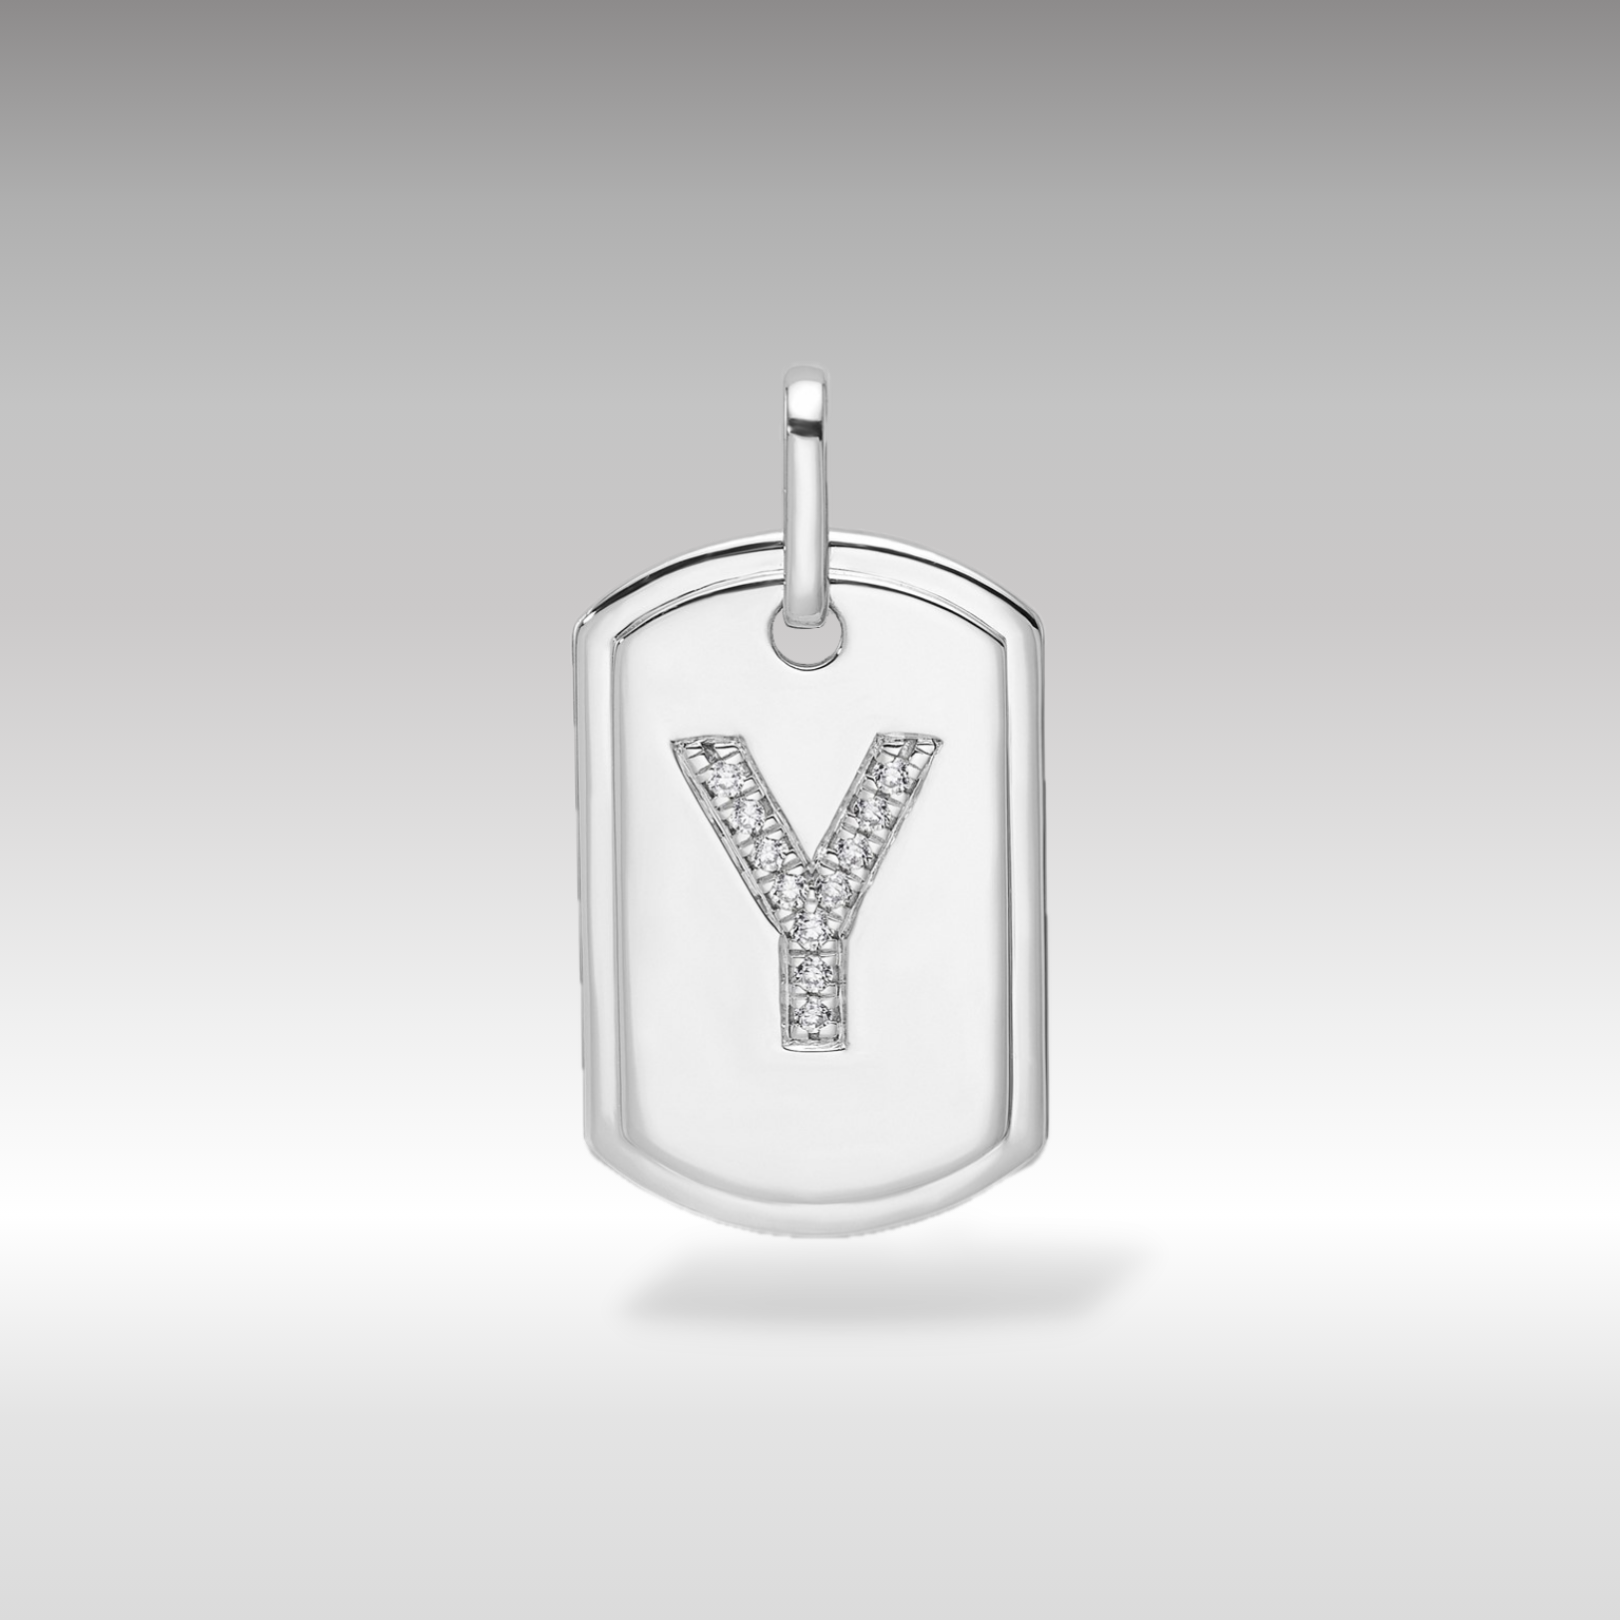 14K White Gold Initial "Y" Dog Tag With Genuine Diamonds - Charlie & Co. Jewelry